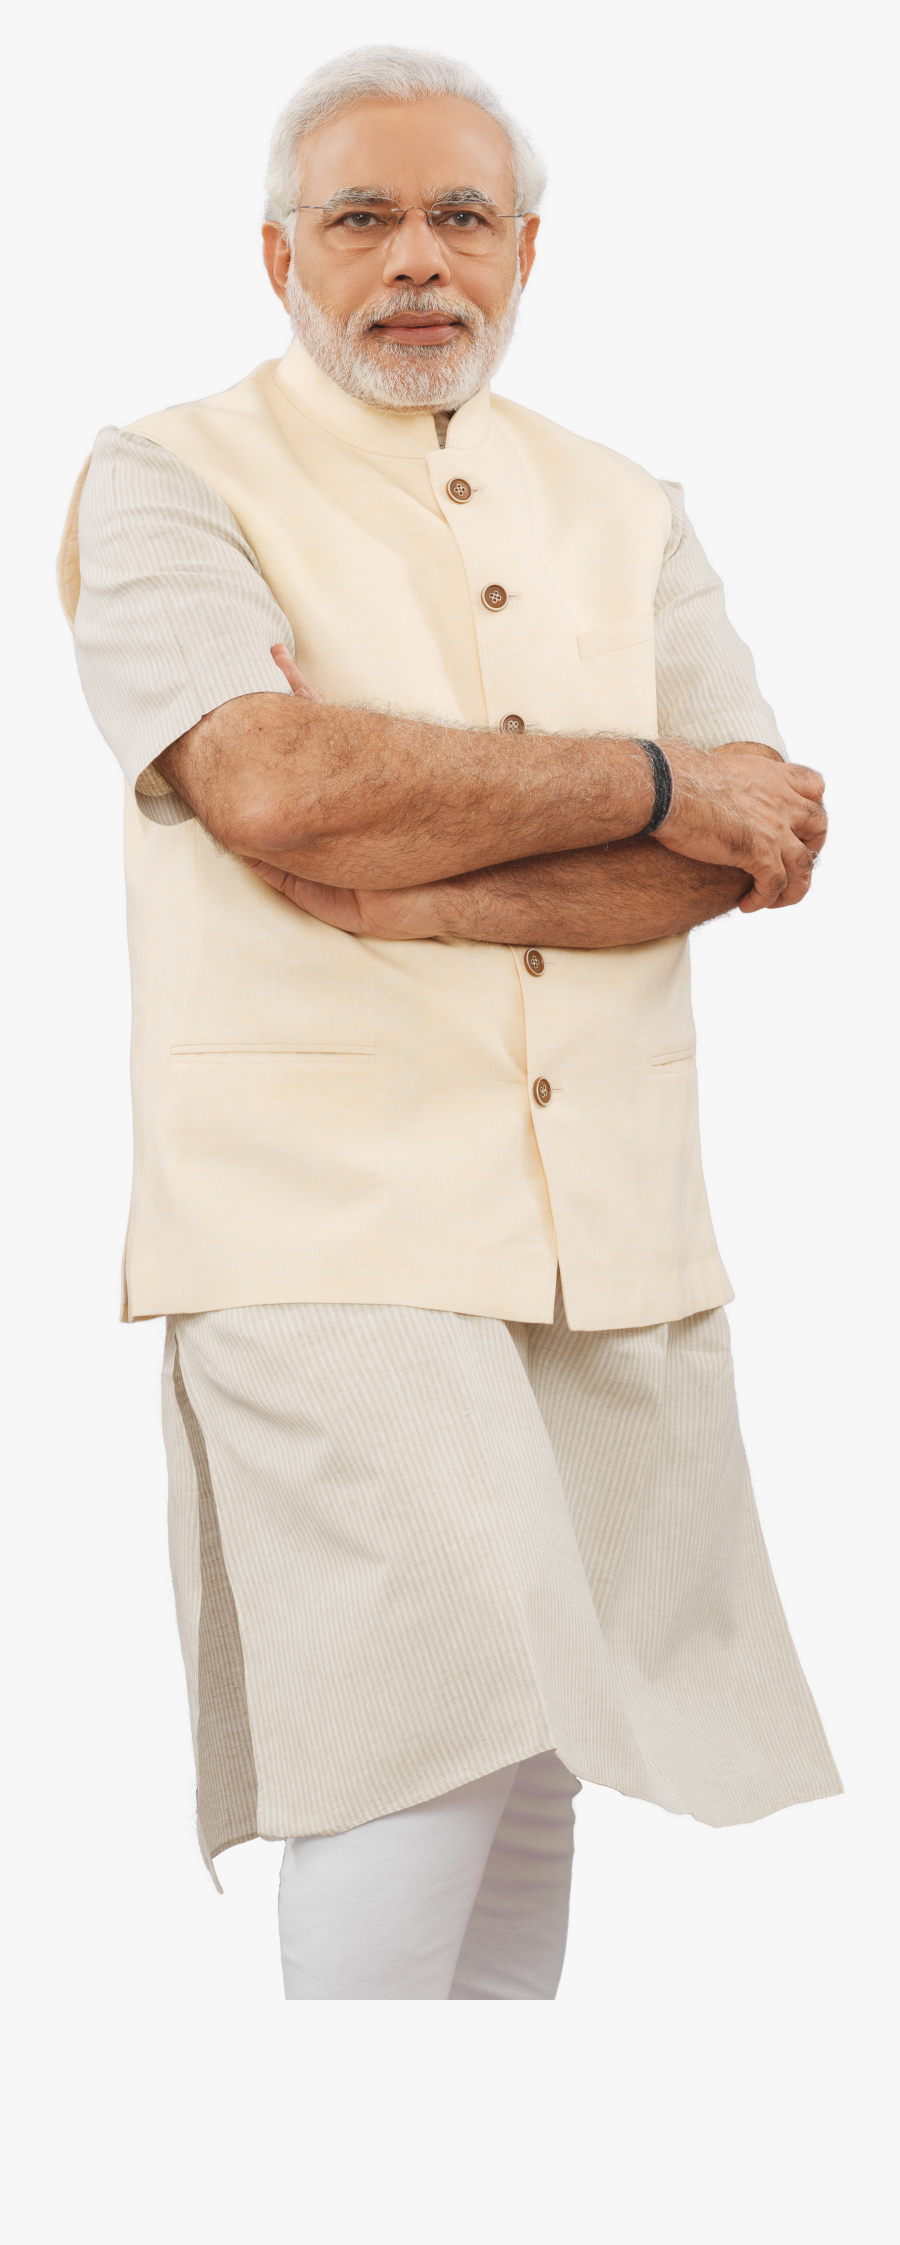 Narendra-modi - Narendra Modi Standing Png, Transparent Clipart